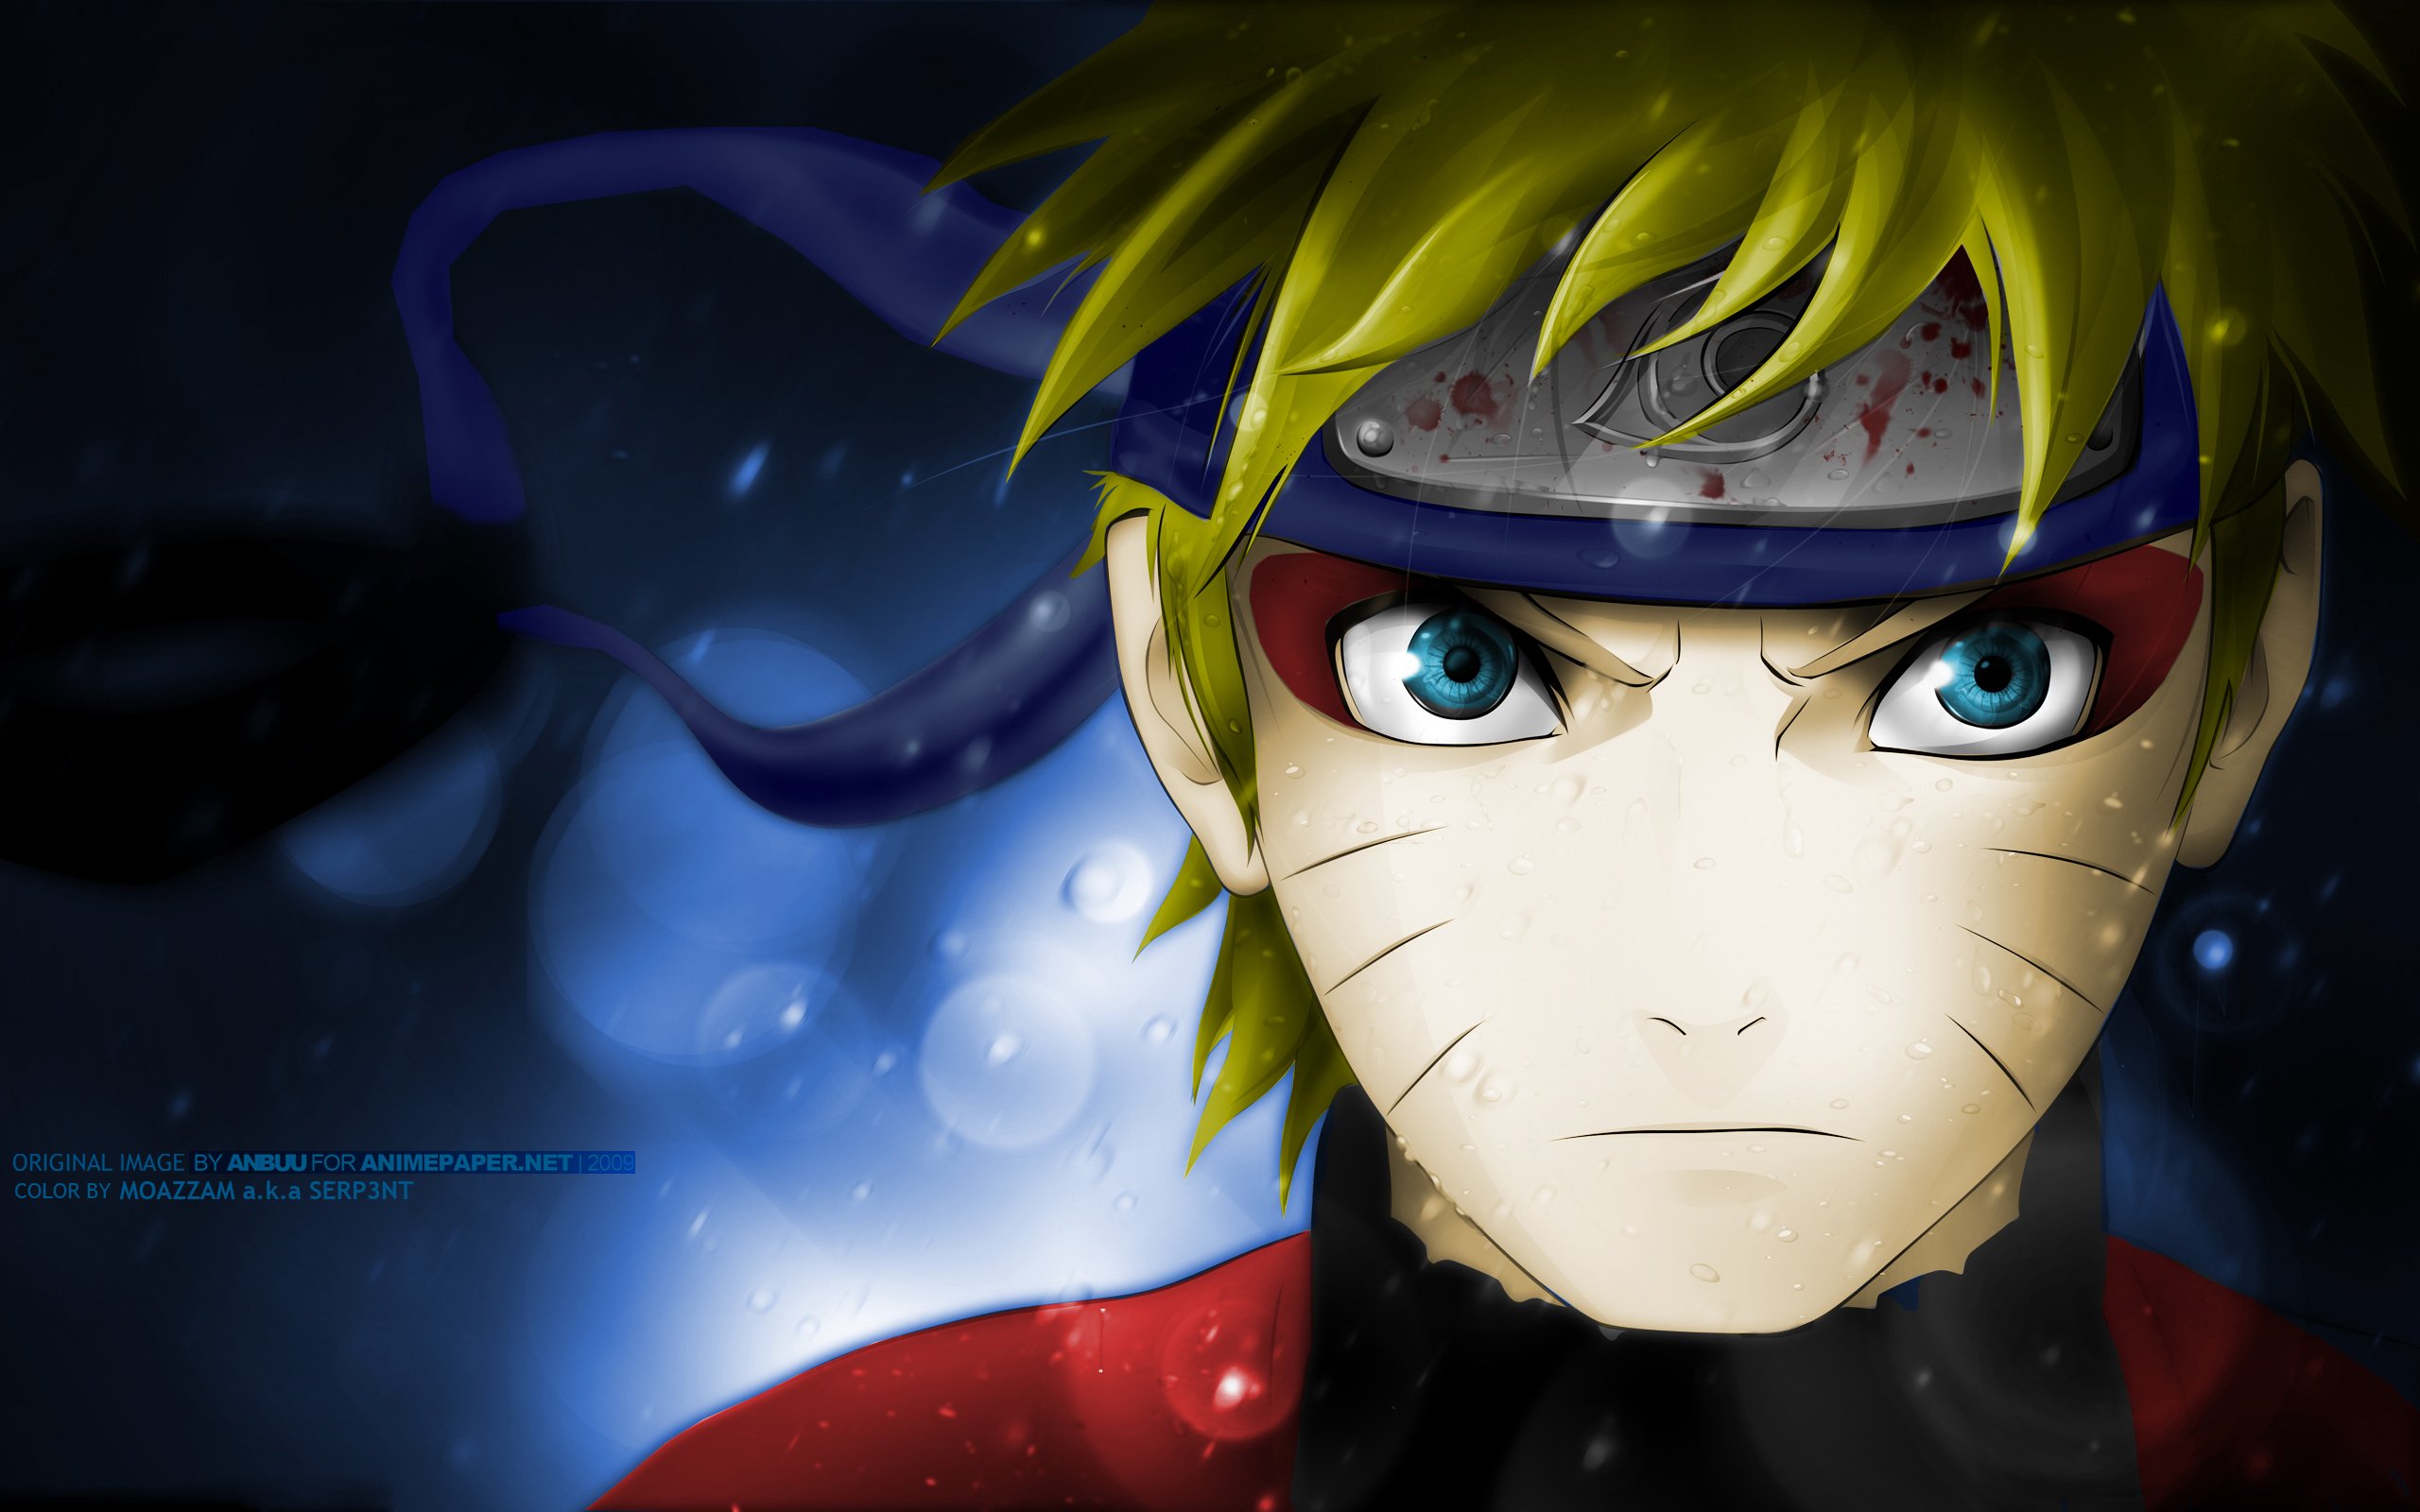 Naruto in Battle Anime Desktop Wallpaper - Naruto Wallpapers in 4K